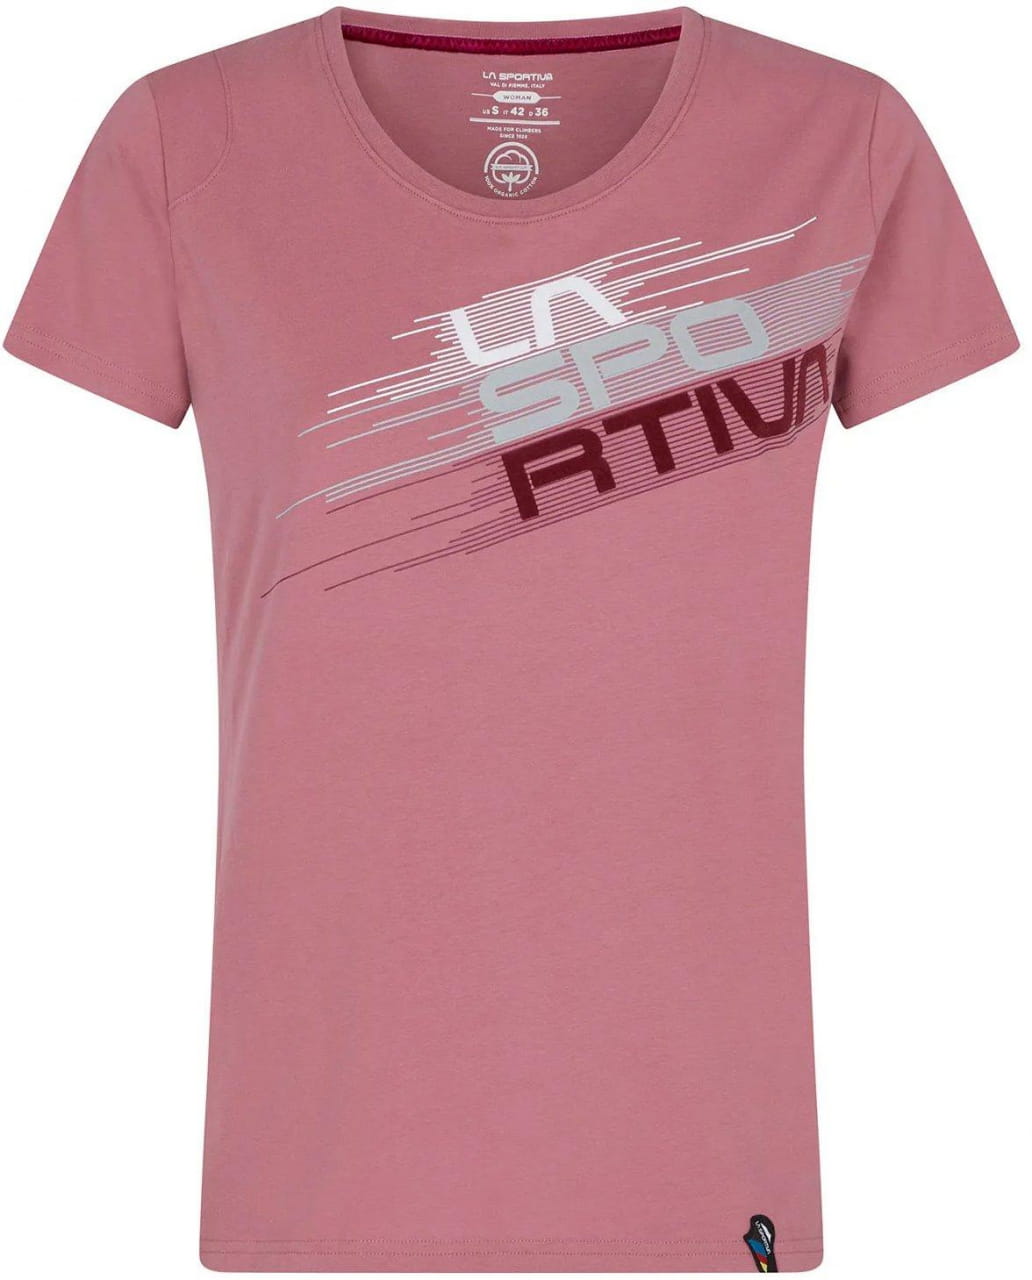 Sporthemd für Frauen La Sportiva Stripe Evo T-Shirt W